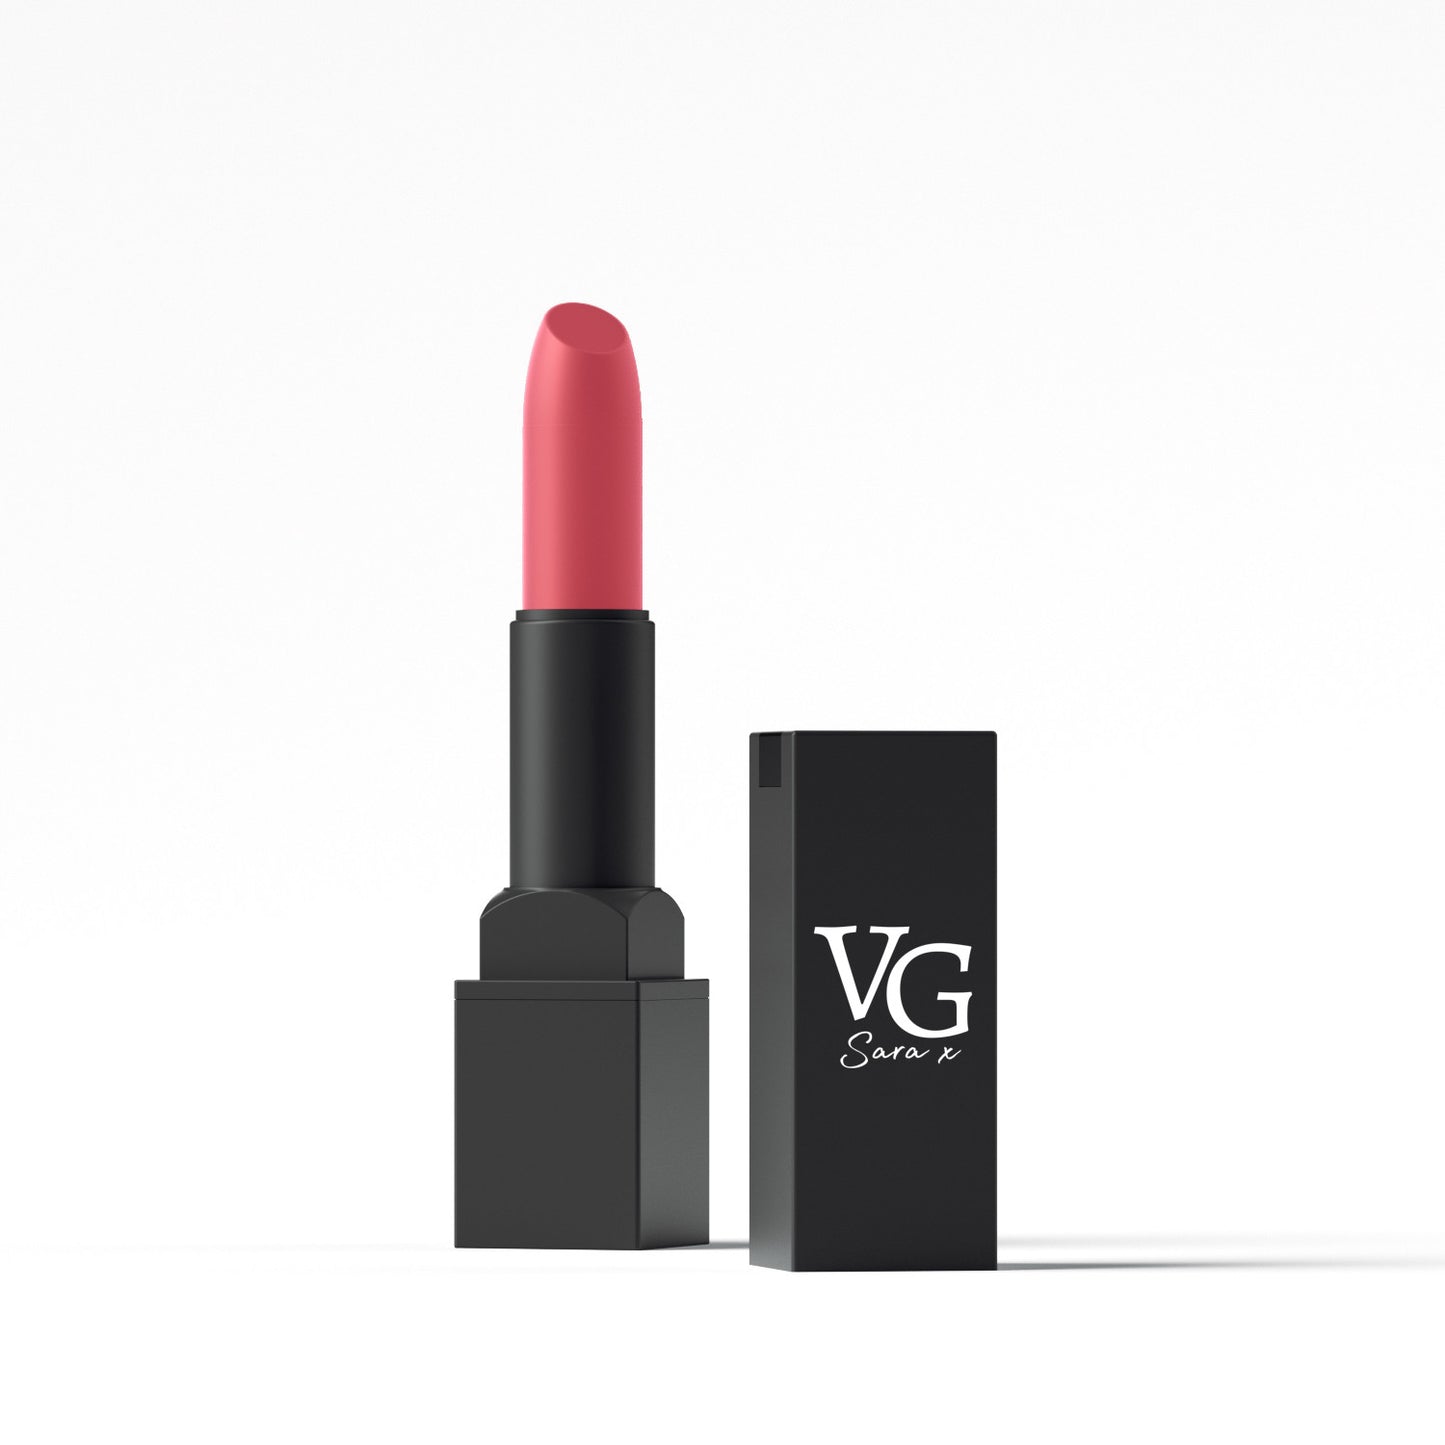 VG branded natural lipstick with long-lasting formula